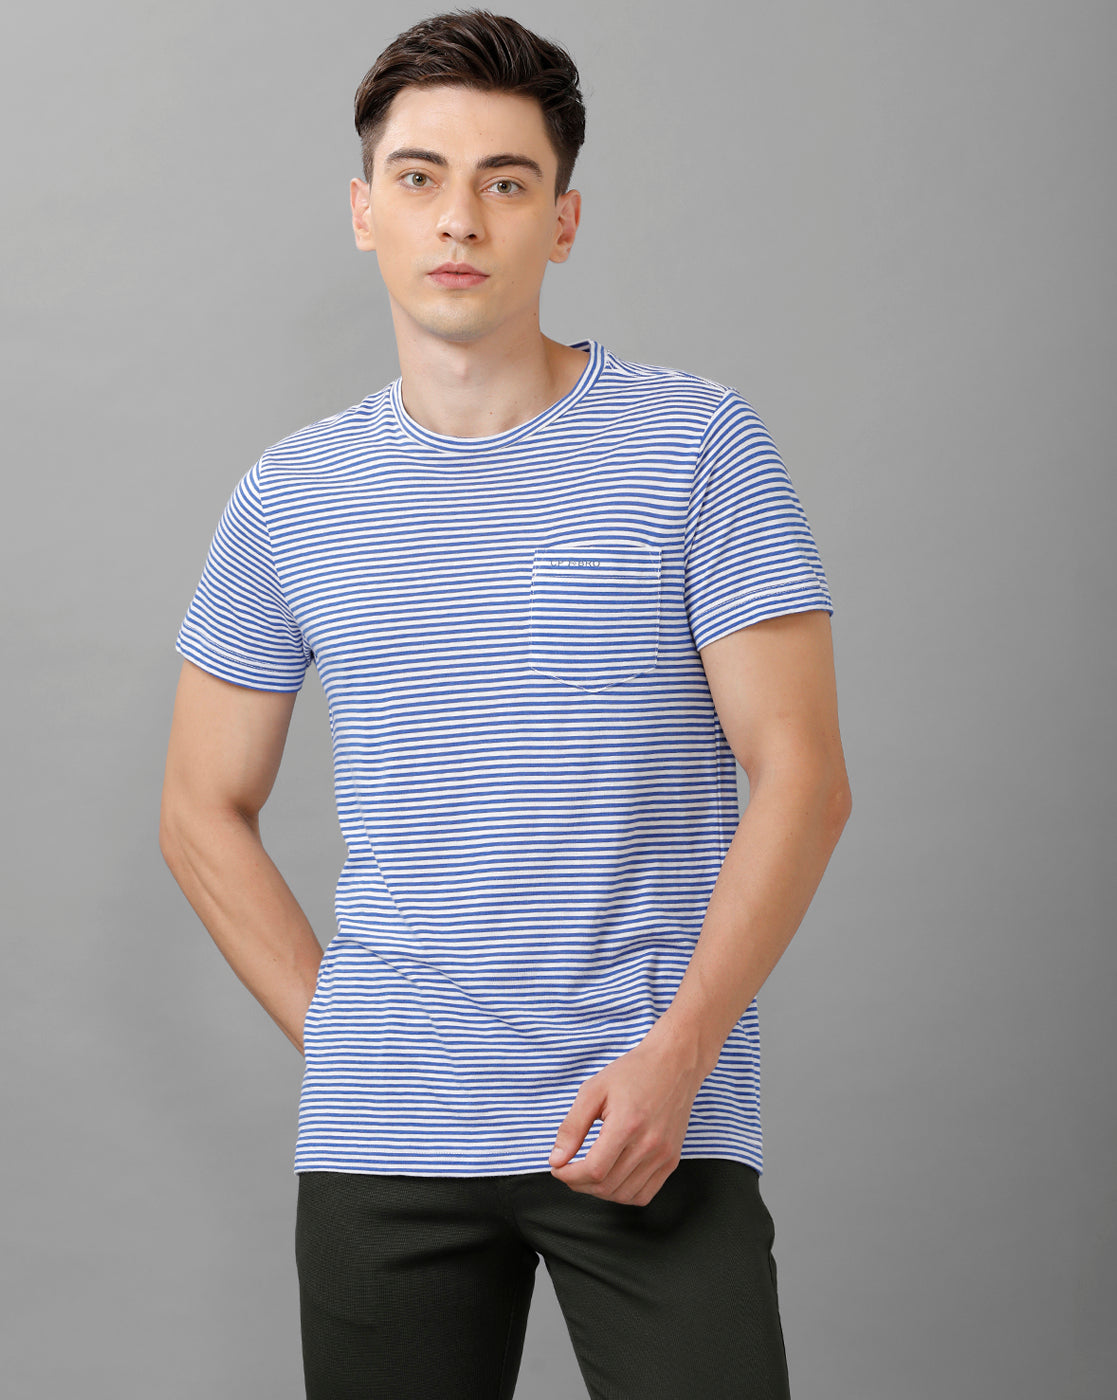 CP BRO Men's Cotton Striped Half Sleeve Slim Fit Round Neck Blue Color T-Shirt | Brcn 498